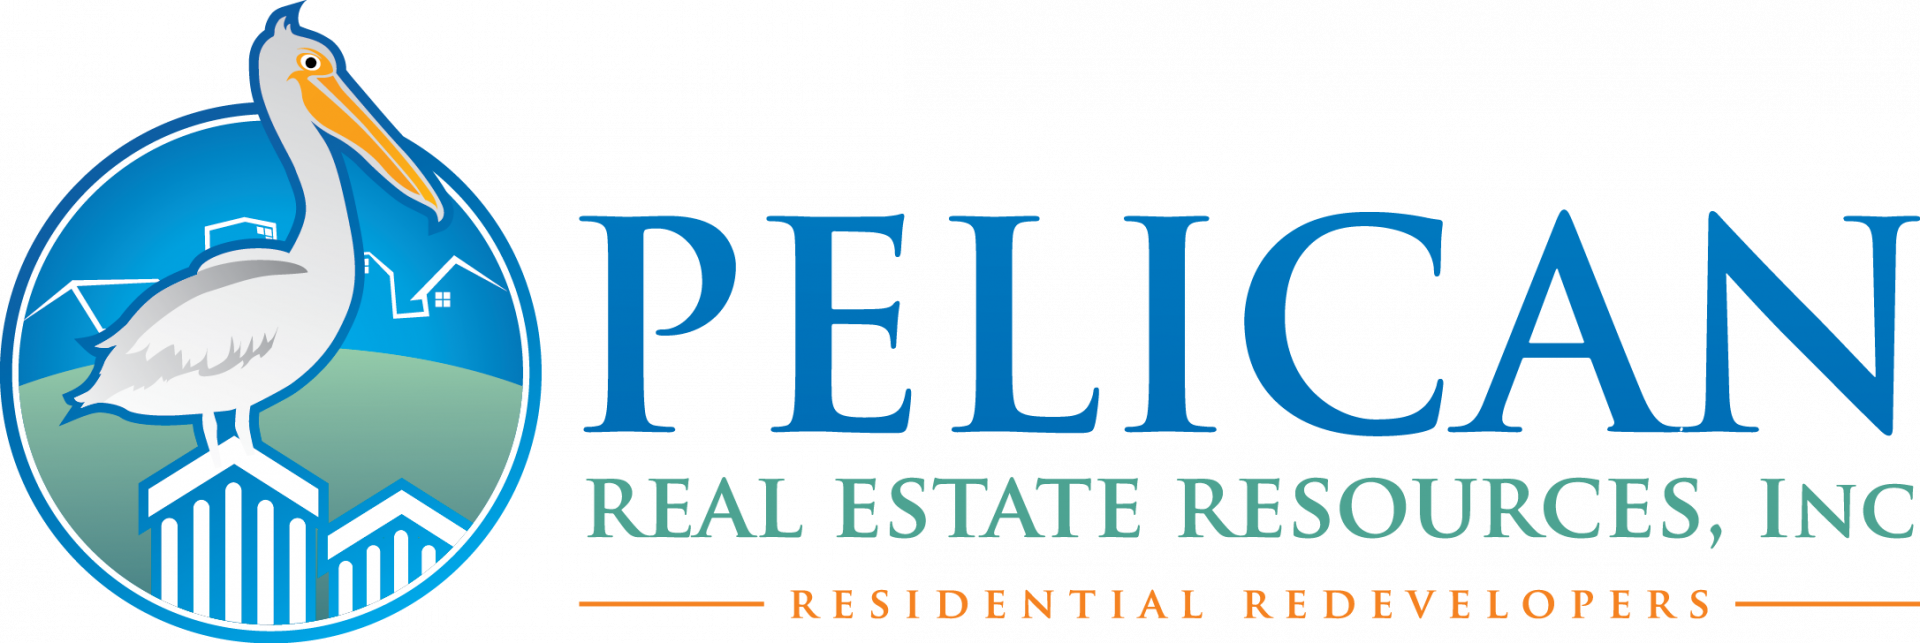 Pelican Real Estate Resources INC  logo